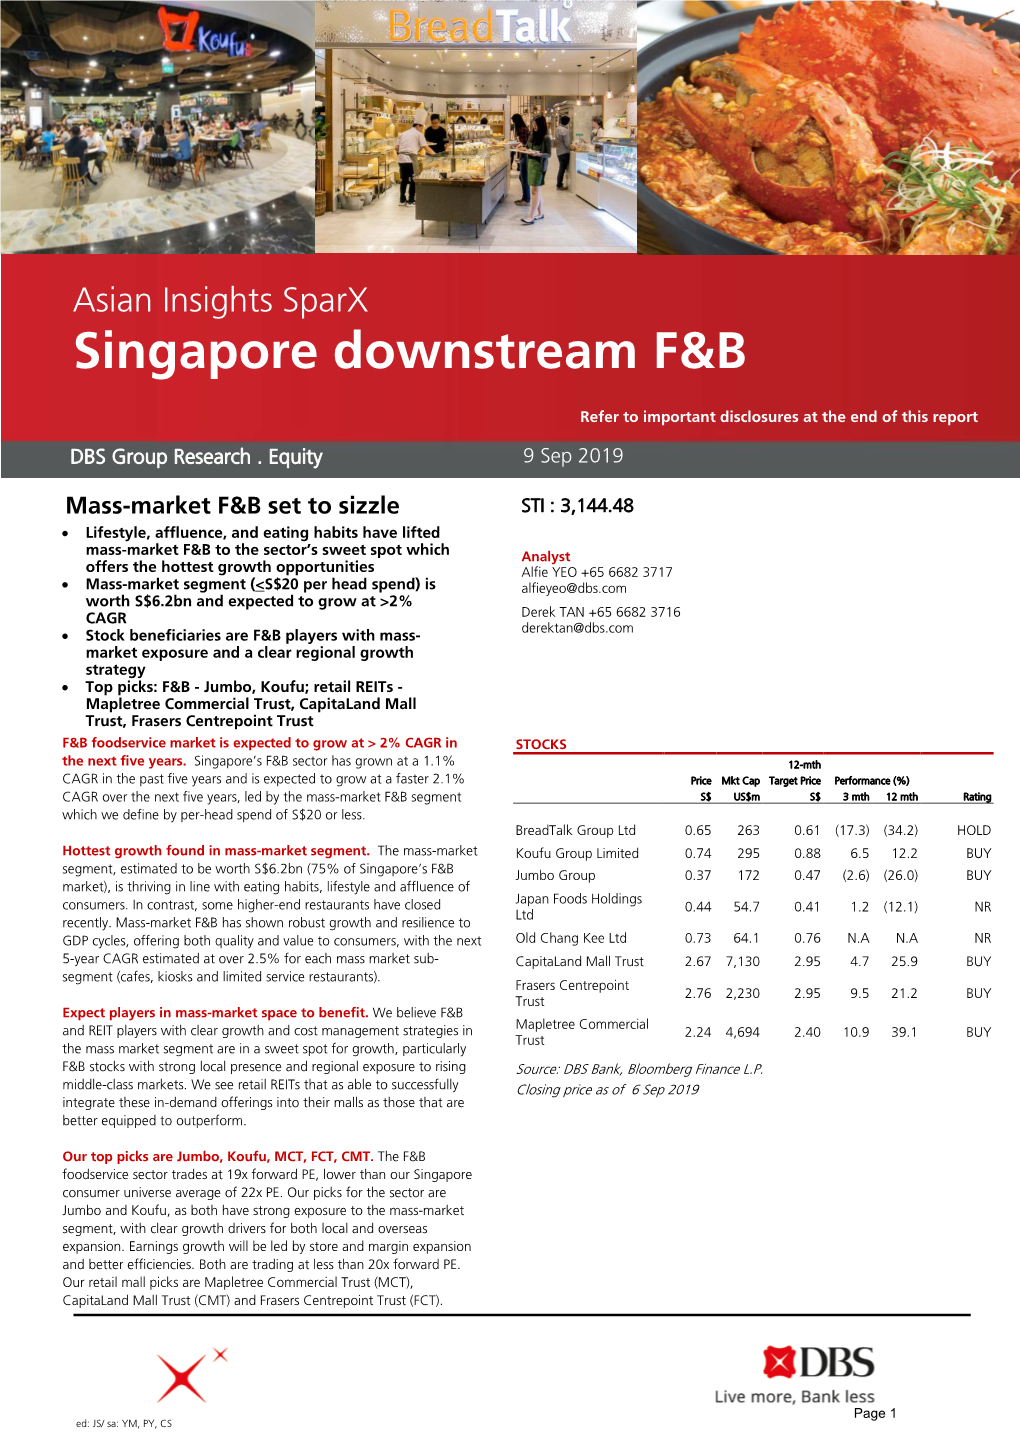 Asian Insights Sparx Singapore Downstream F&B